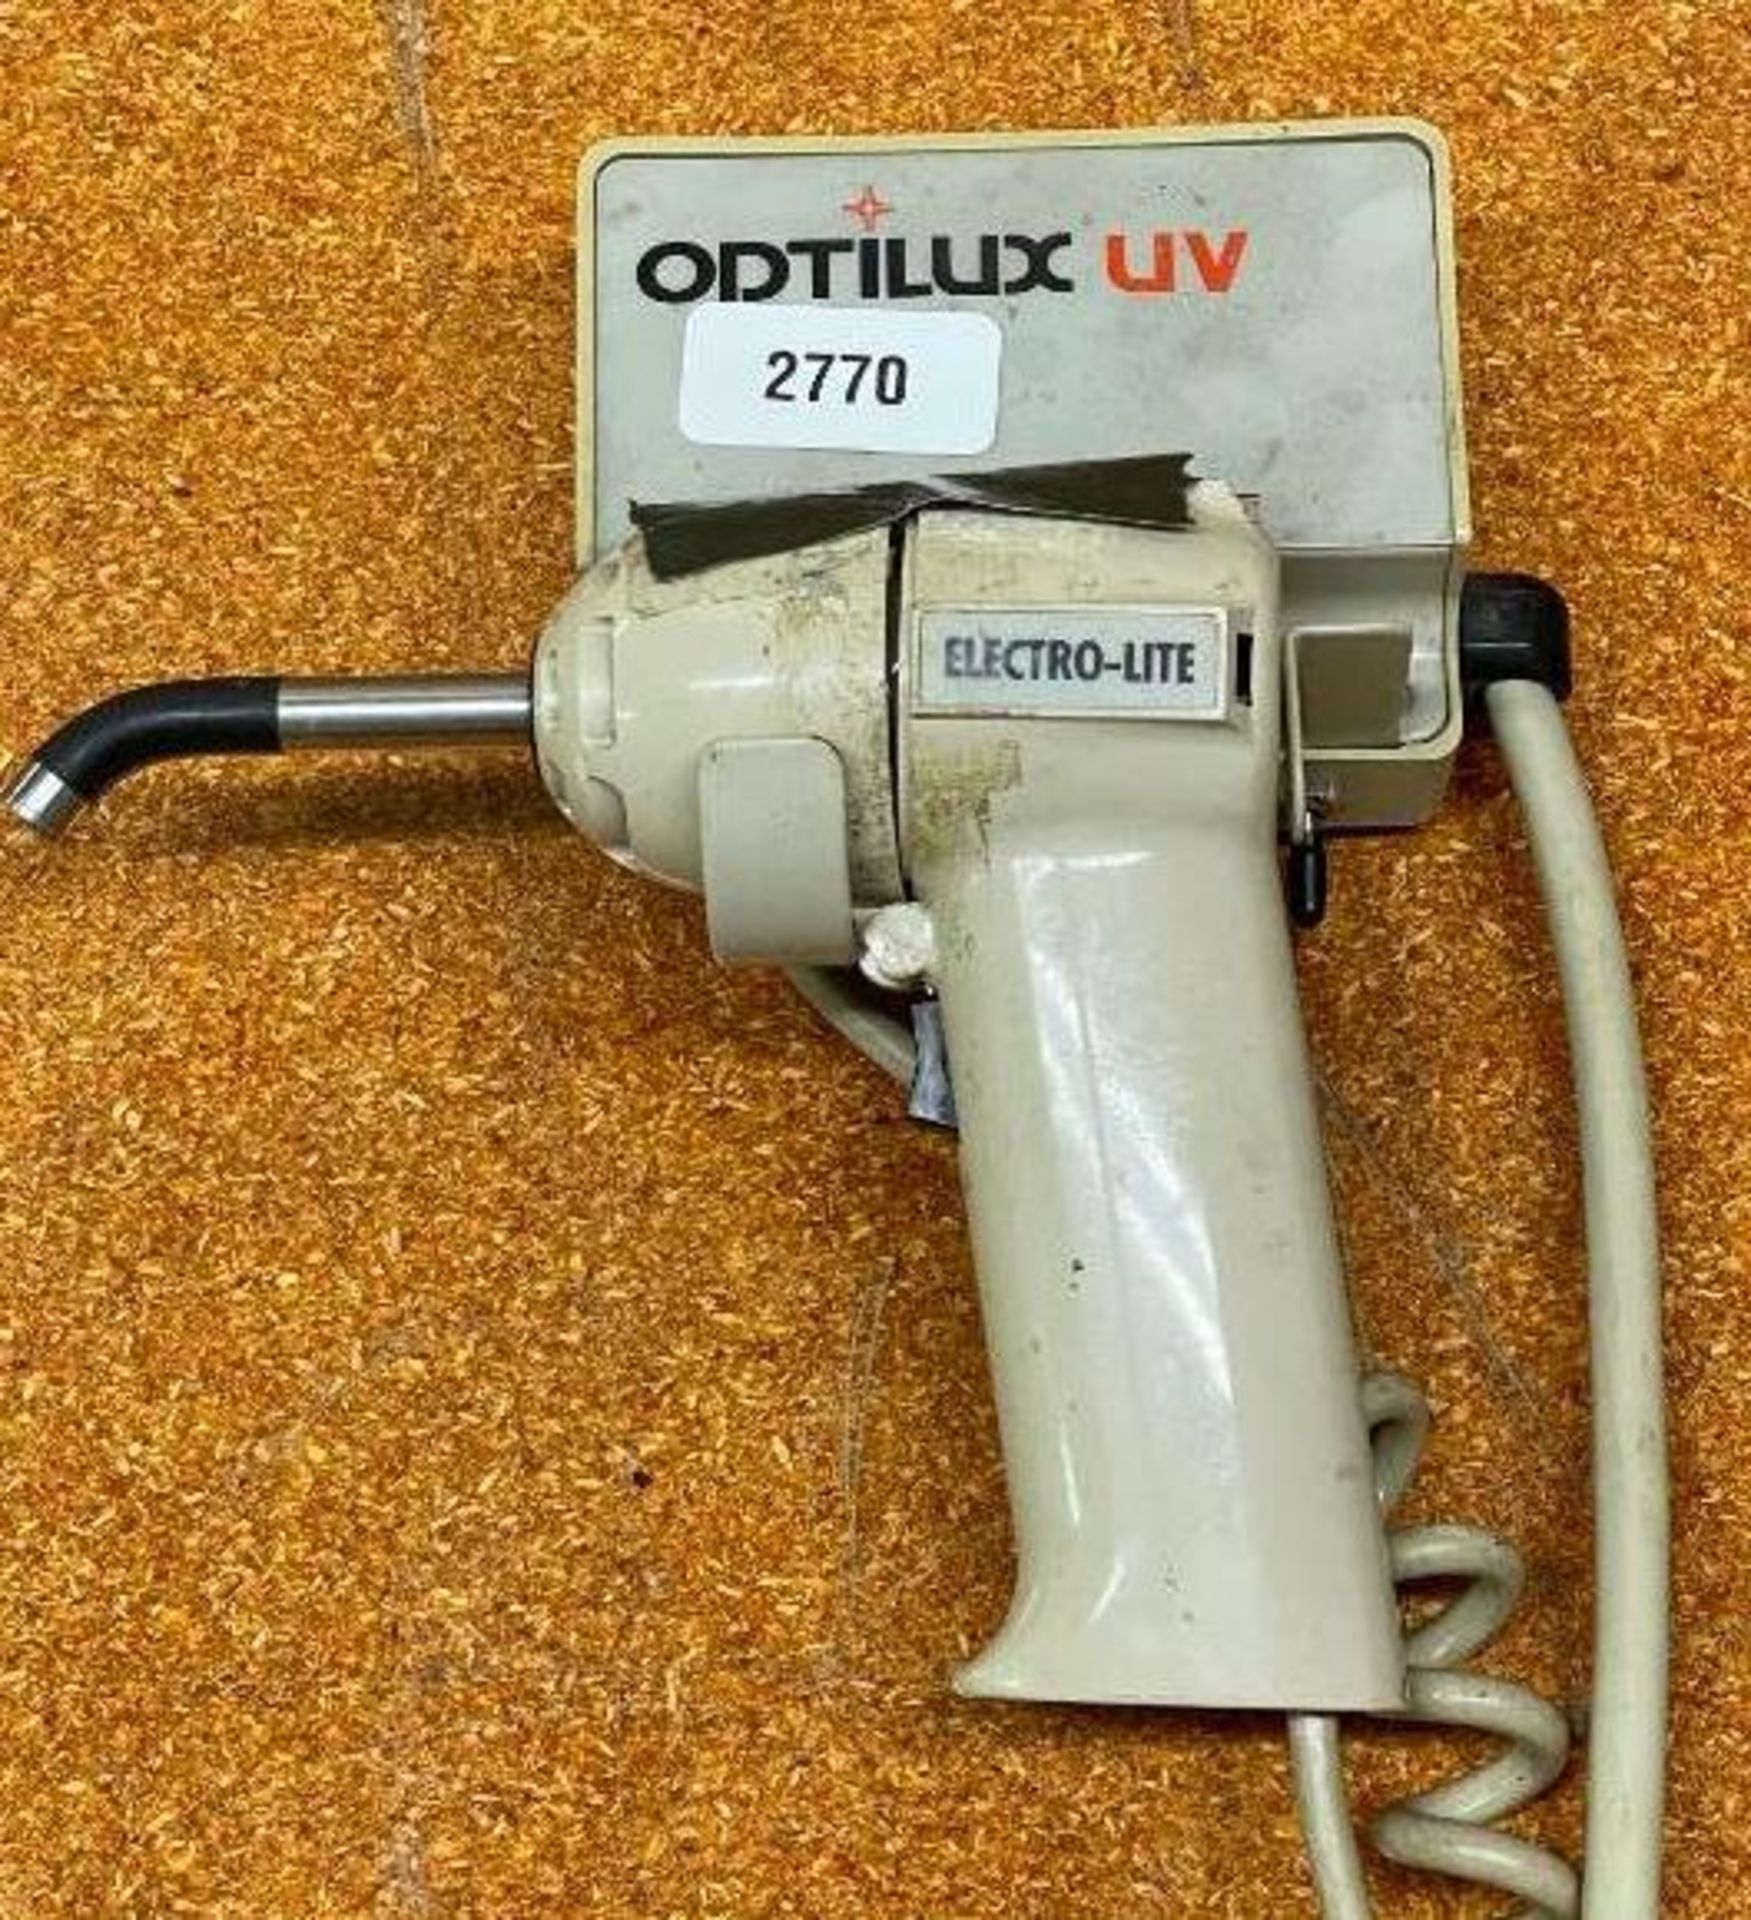 OPTILUX UV CURE GUN BRAND/MODEL: ELECTROLITE CORP QTY: 1